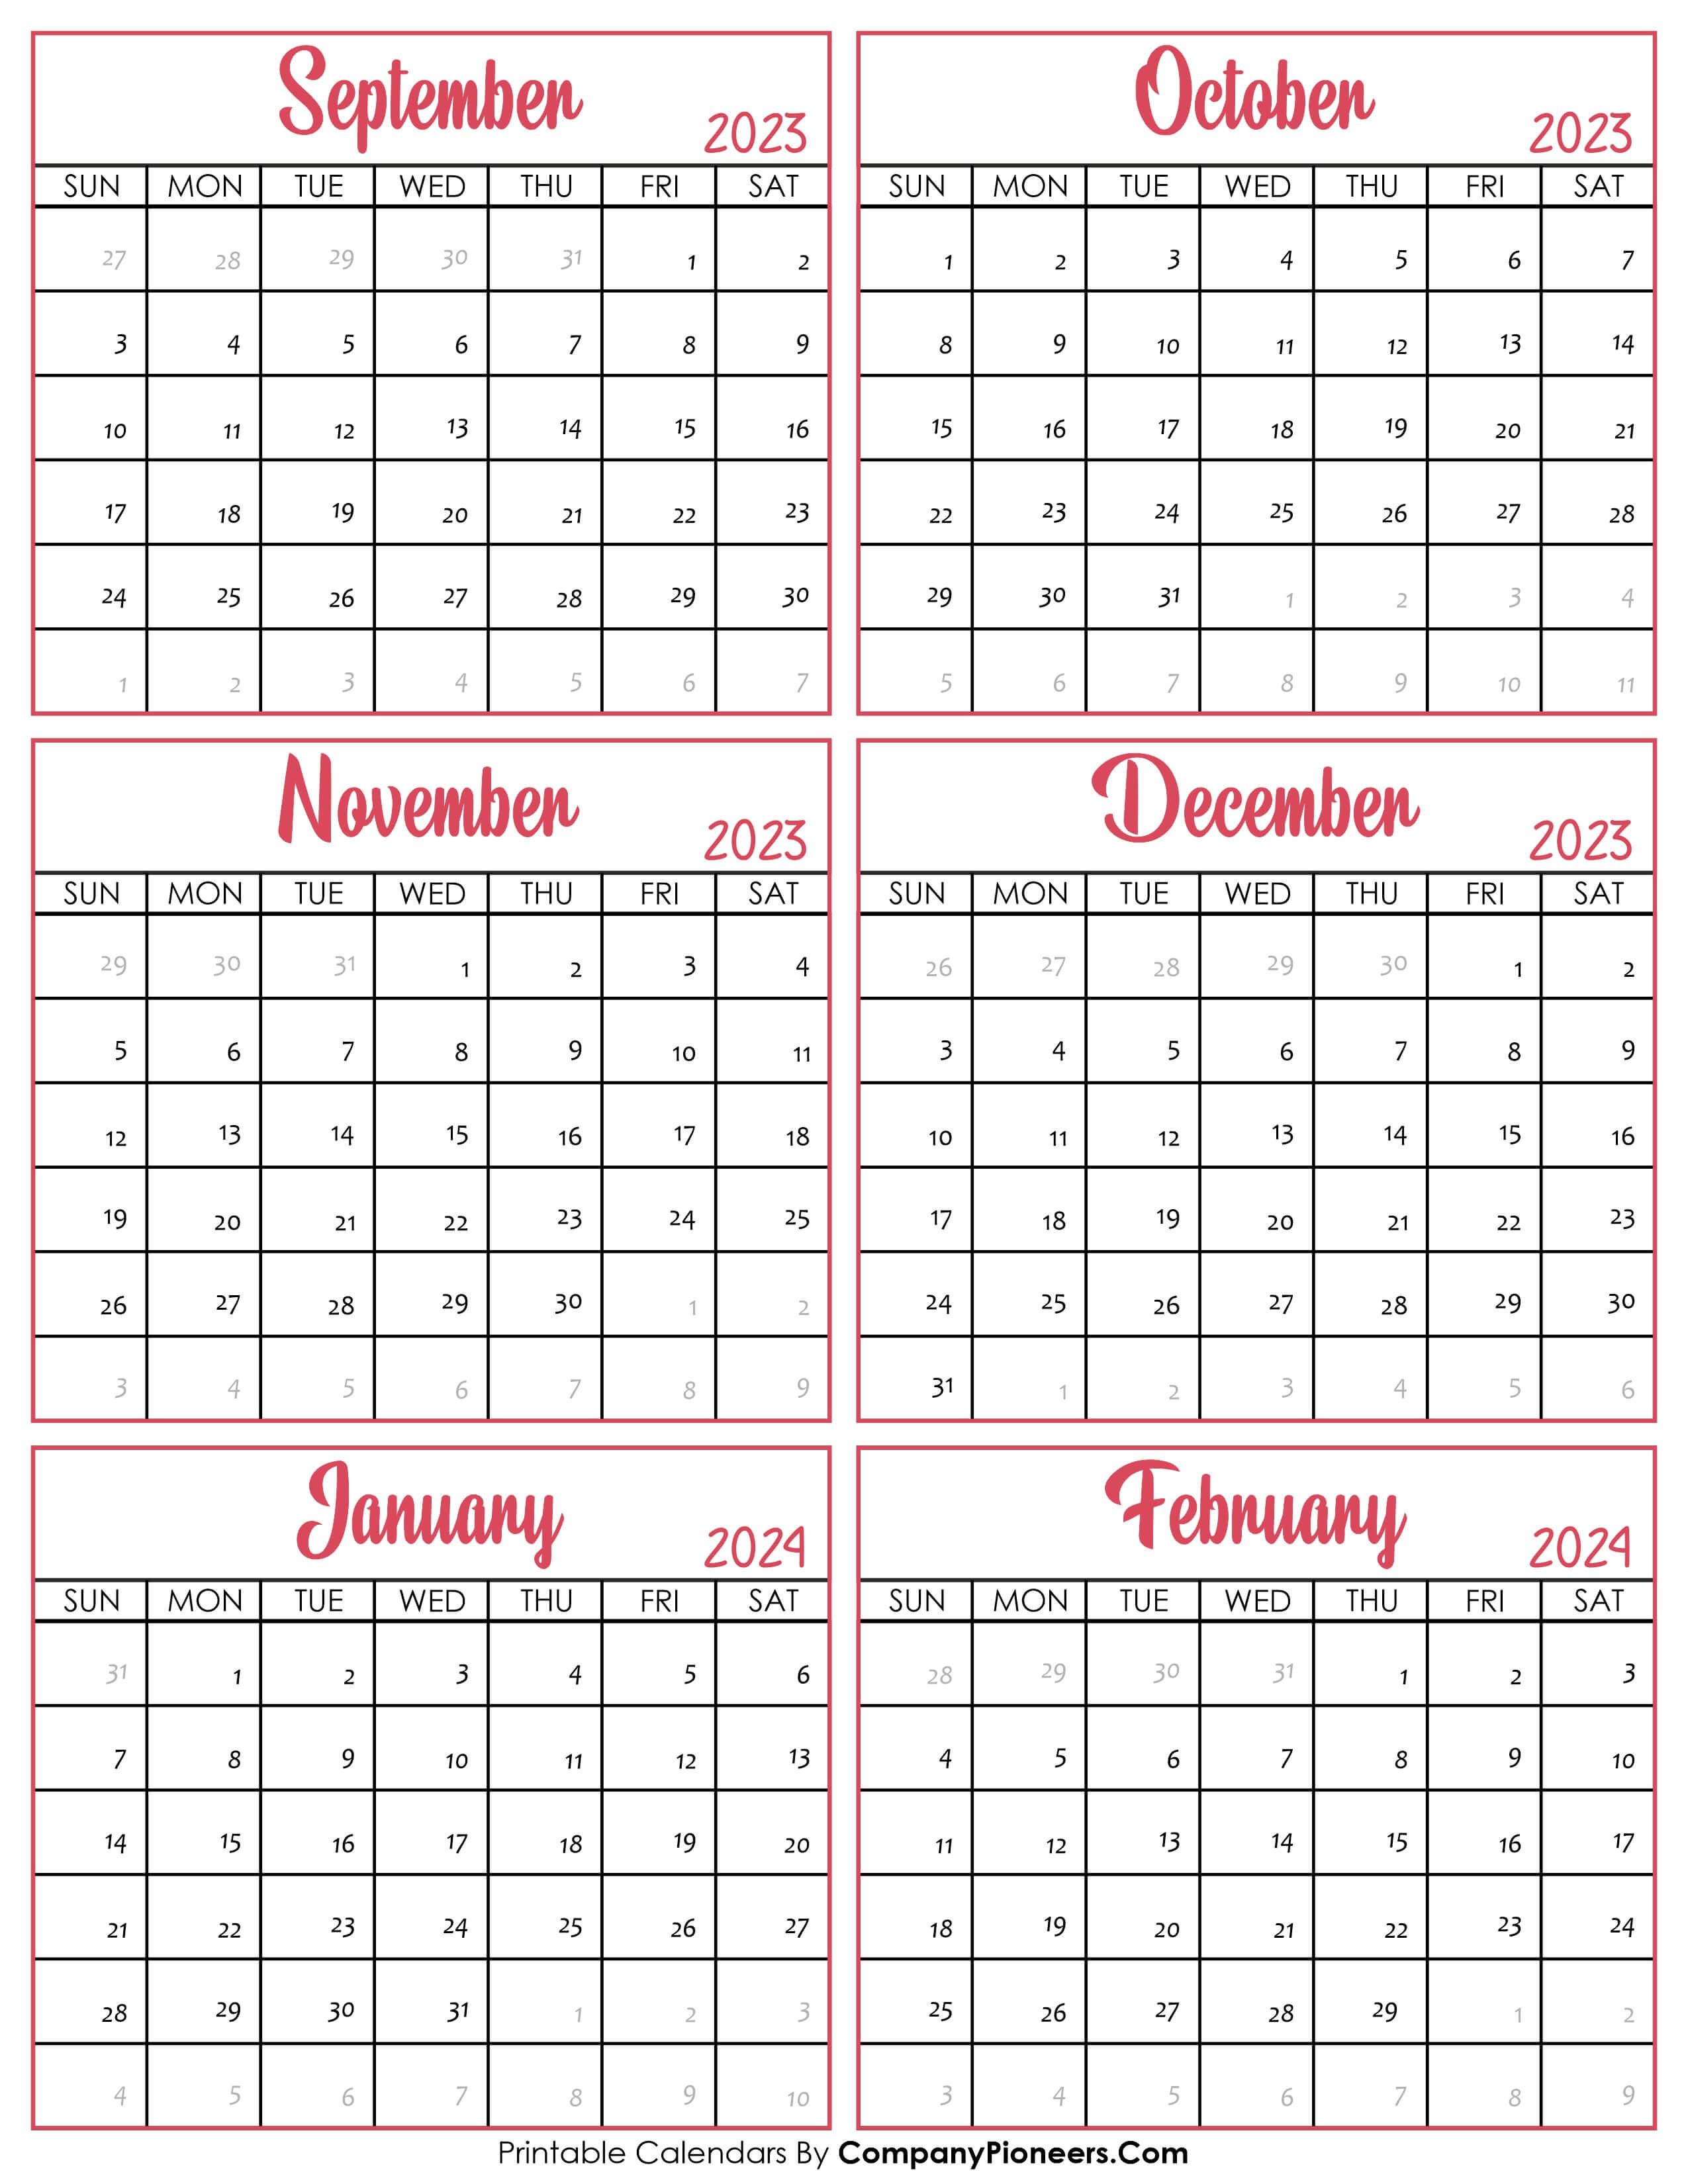 Calendar September 2023 to February 2024